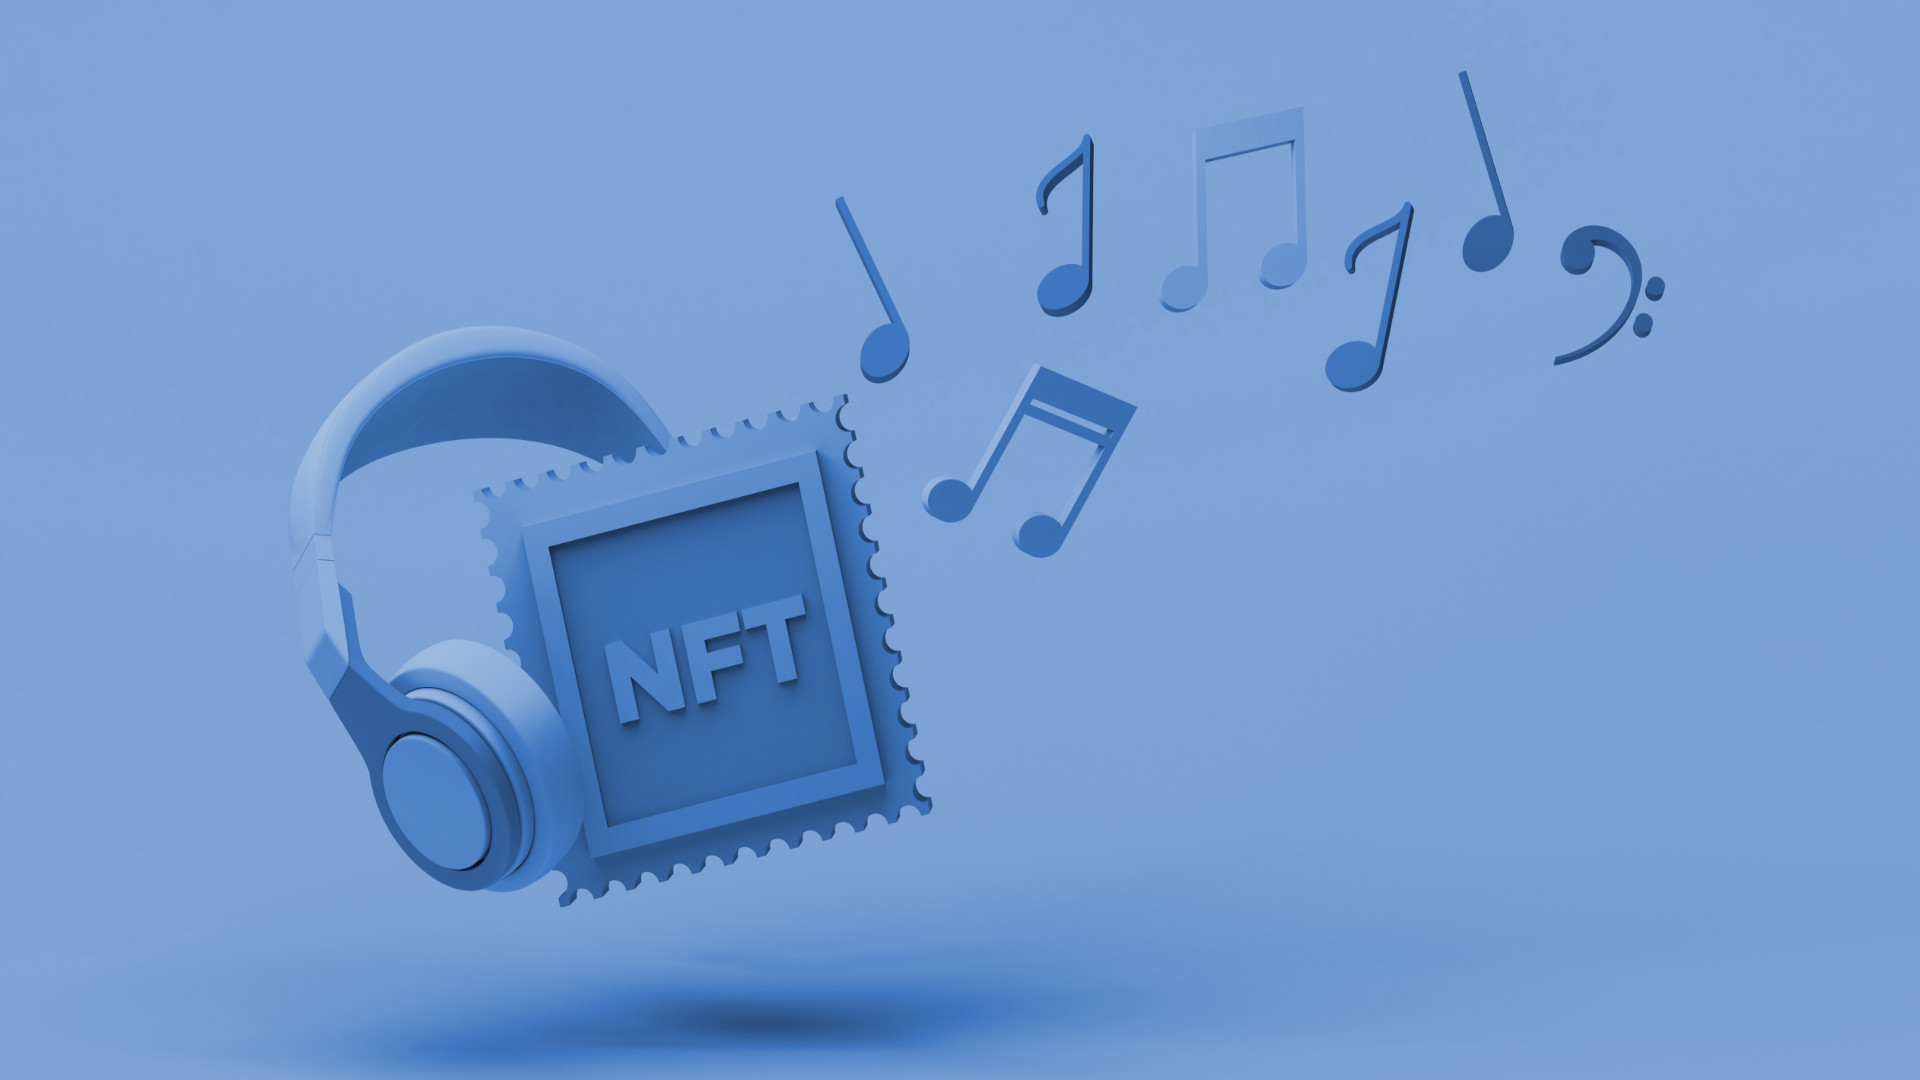 TheTopSpotOnline | The NFT Platform for Monetizing Music NFTs